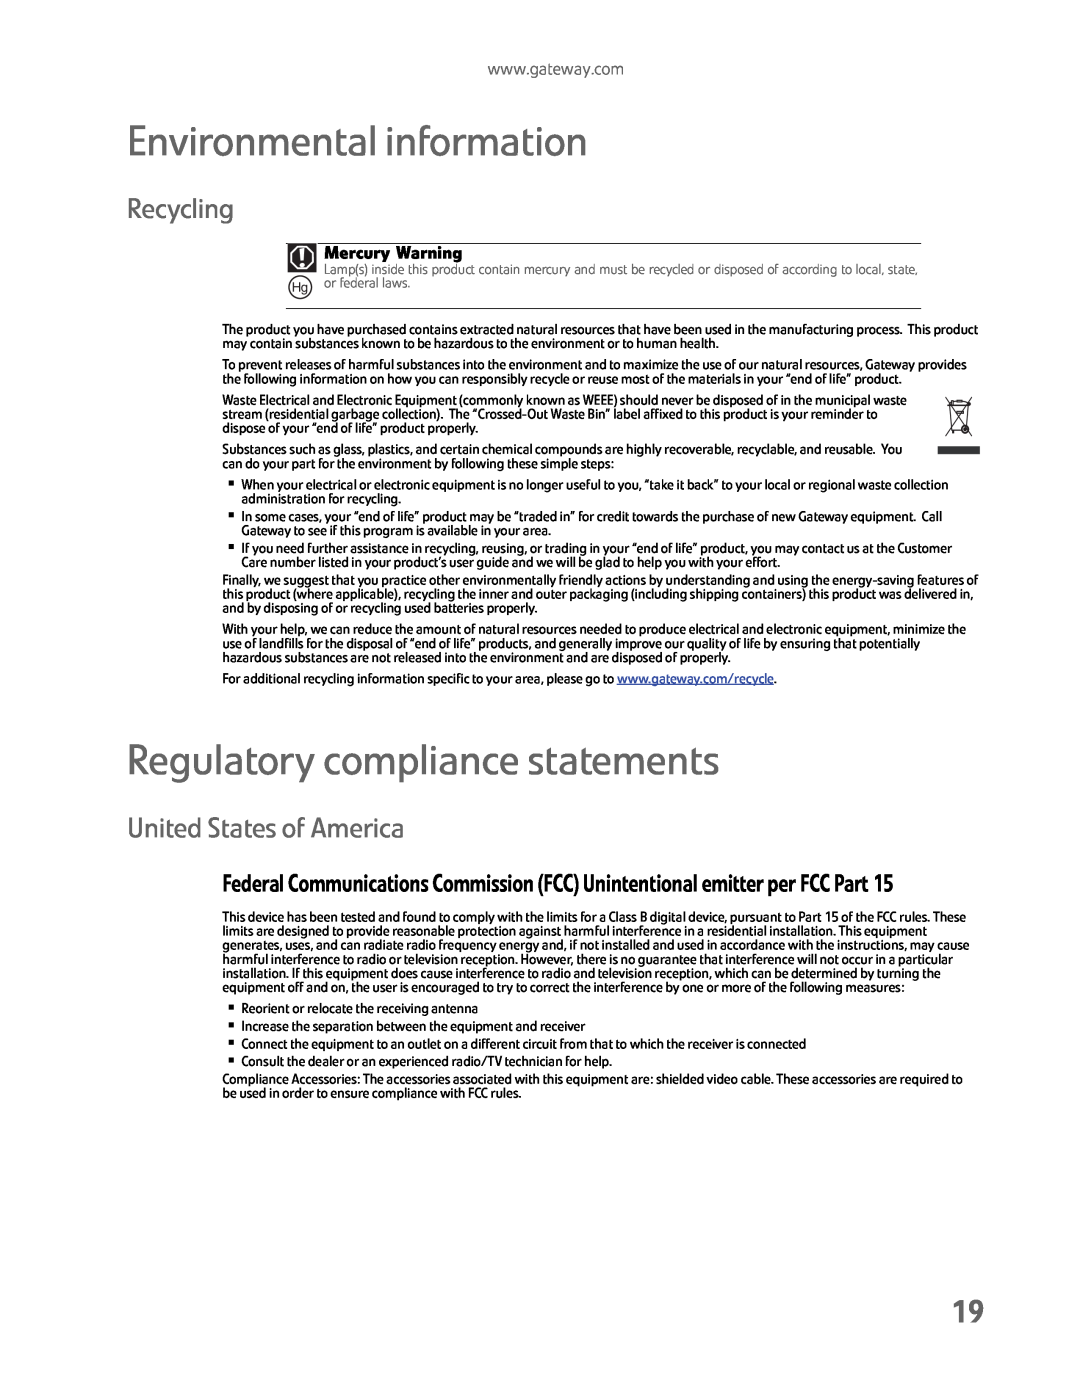 Gateway HD2202 manual Environmental information, Regulatory compliance statements, Recycling, United States of America 